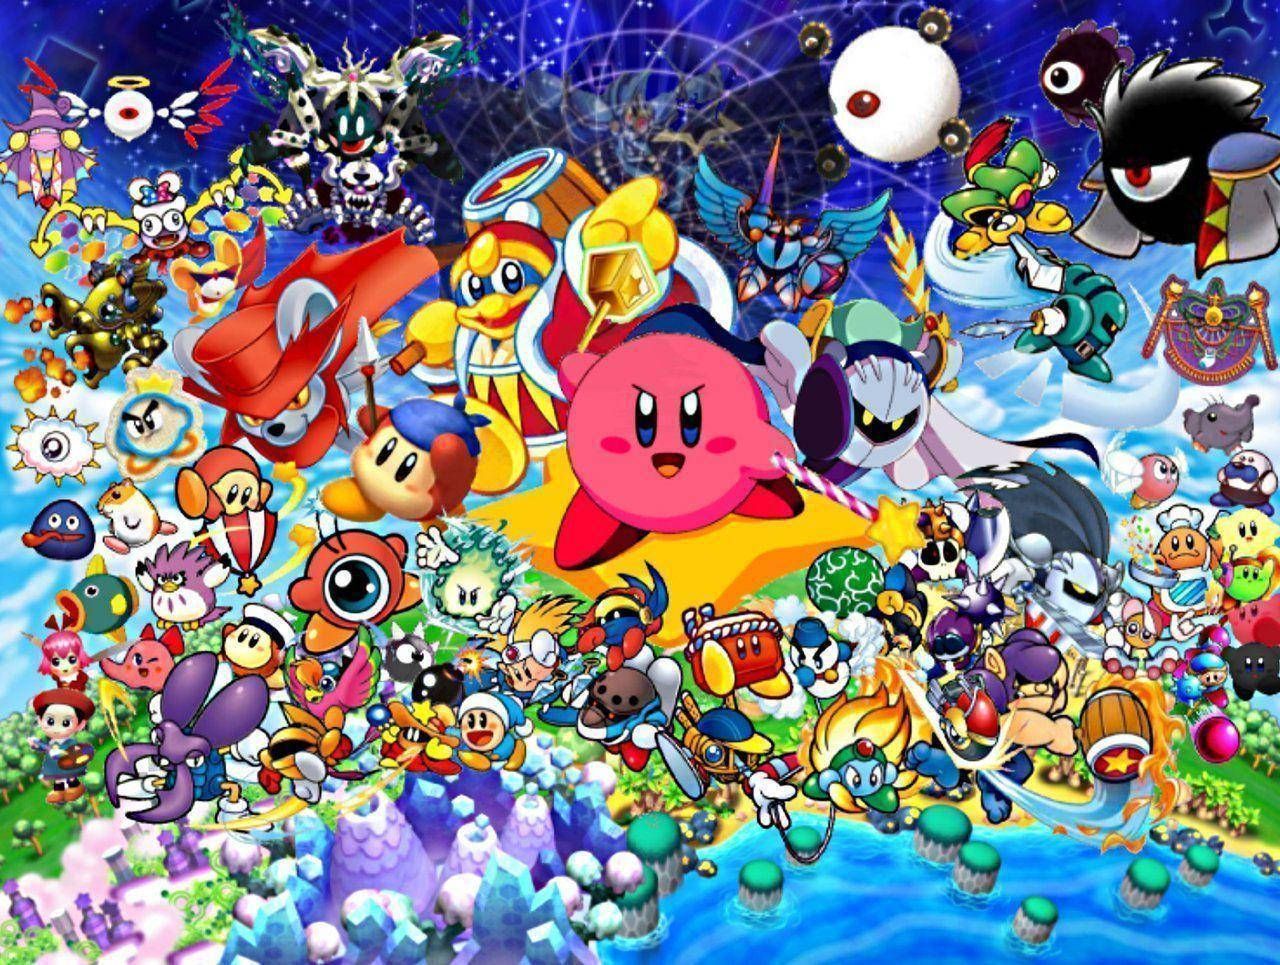 Kirby and friends wallpaper - Nintendo, Kirby